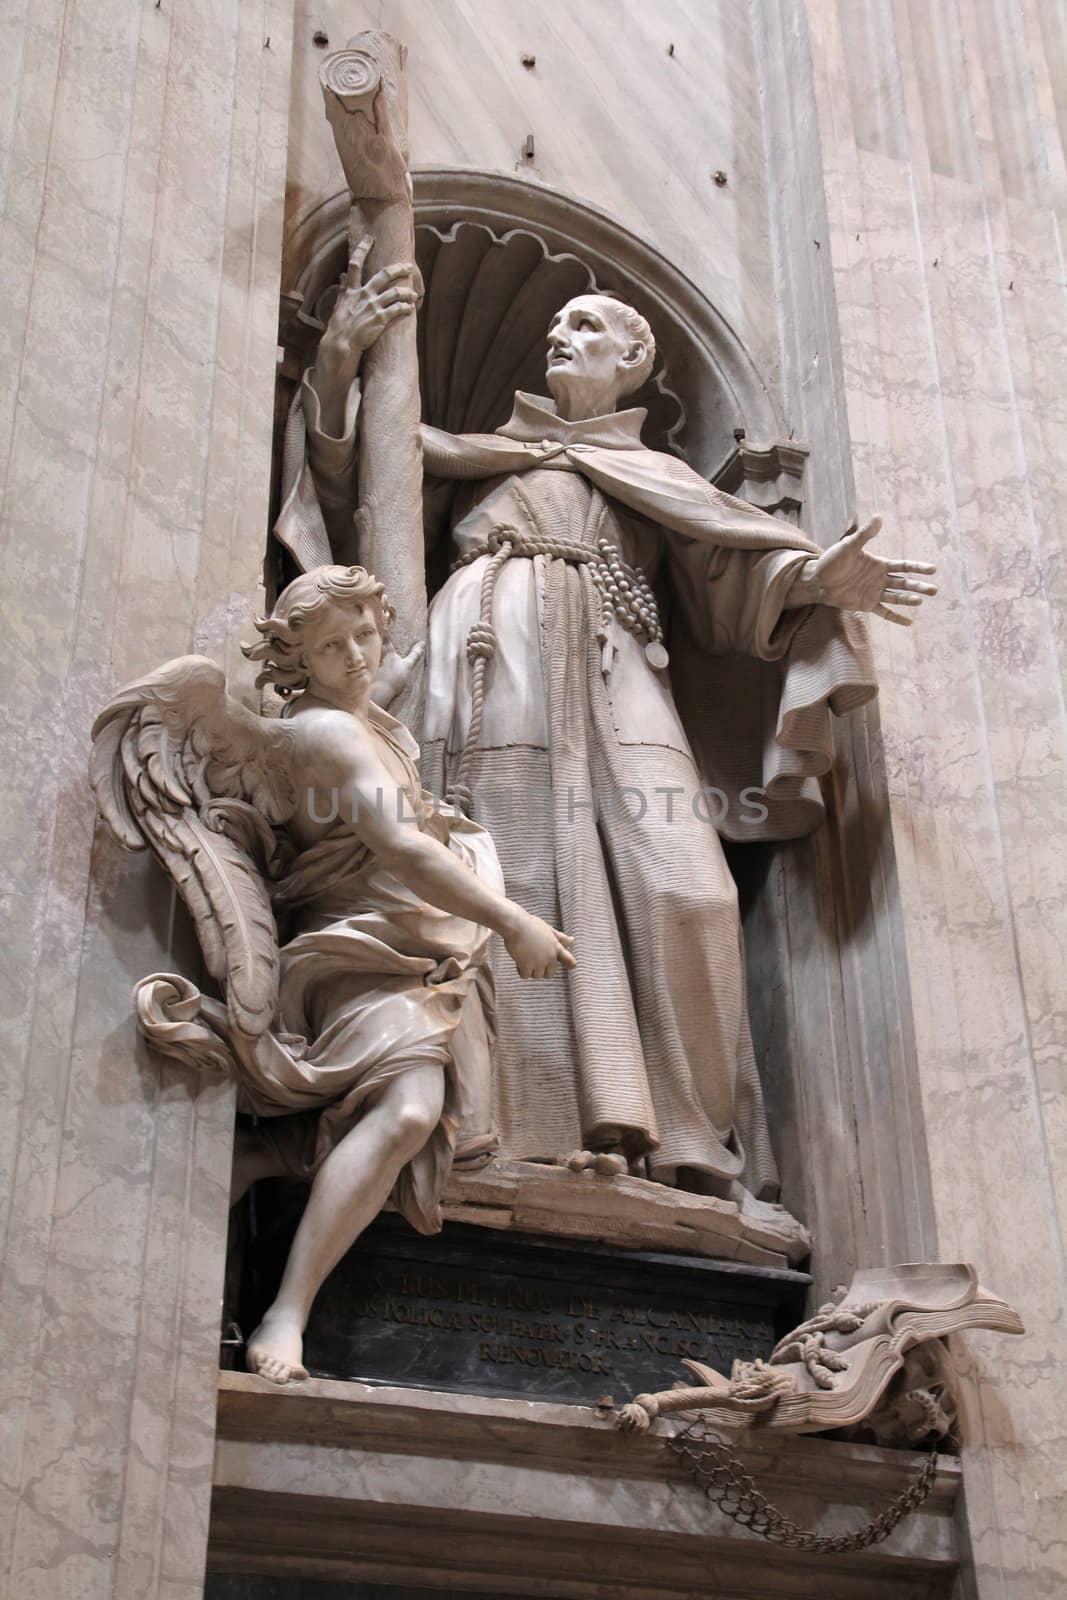 Statue of Saint Peter of Alcantara in Saint Peter's Basilica in Vatican (Rome, Italy). Created by Spanish sculptor, Francisco Vergara.